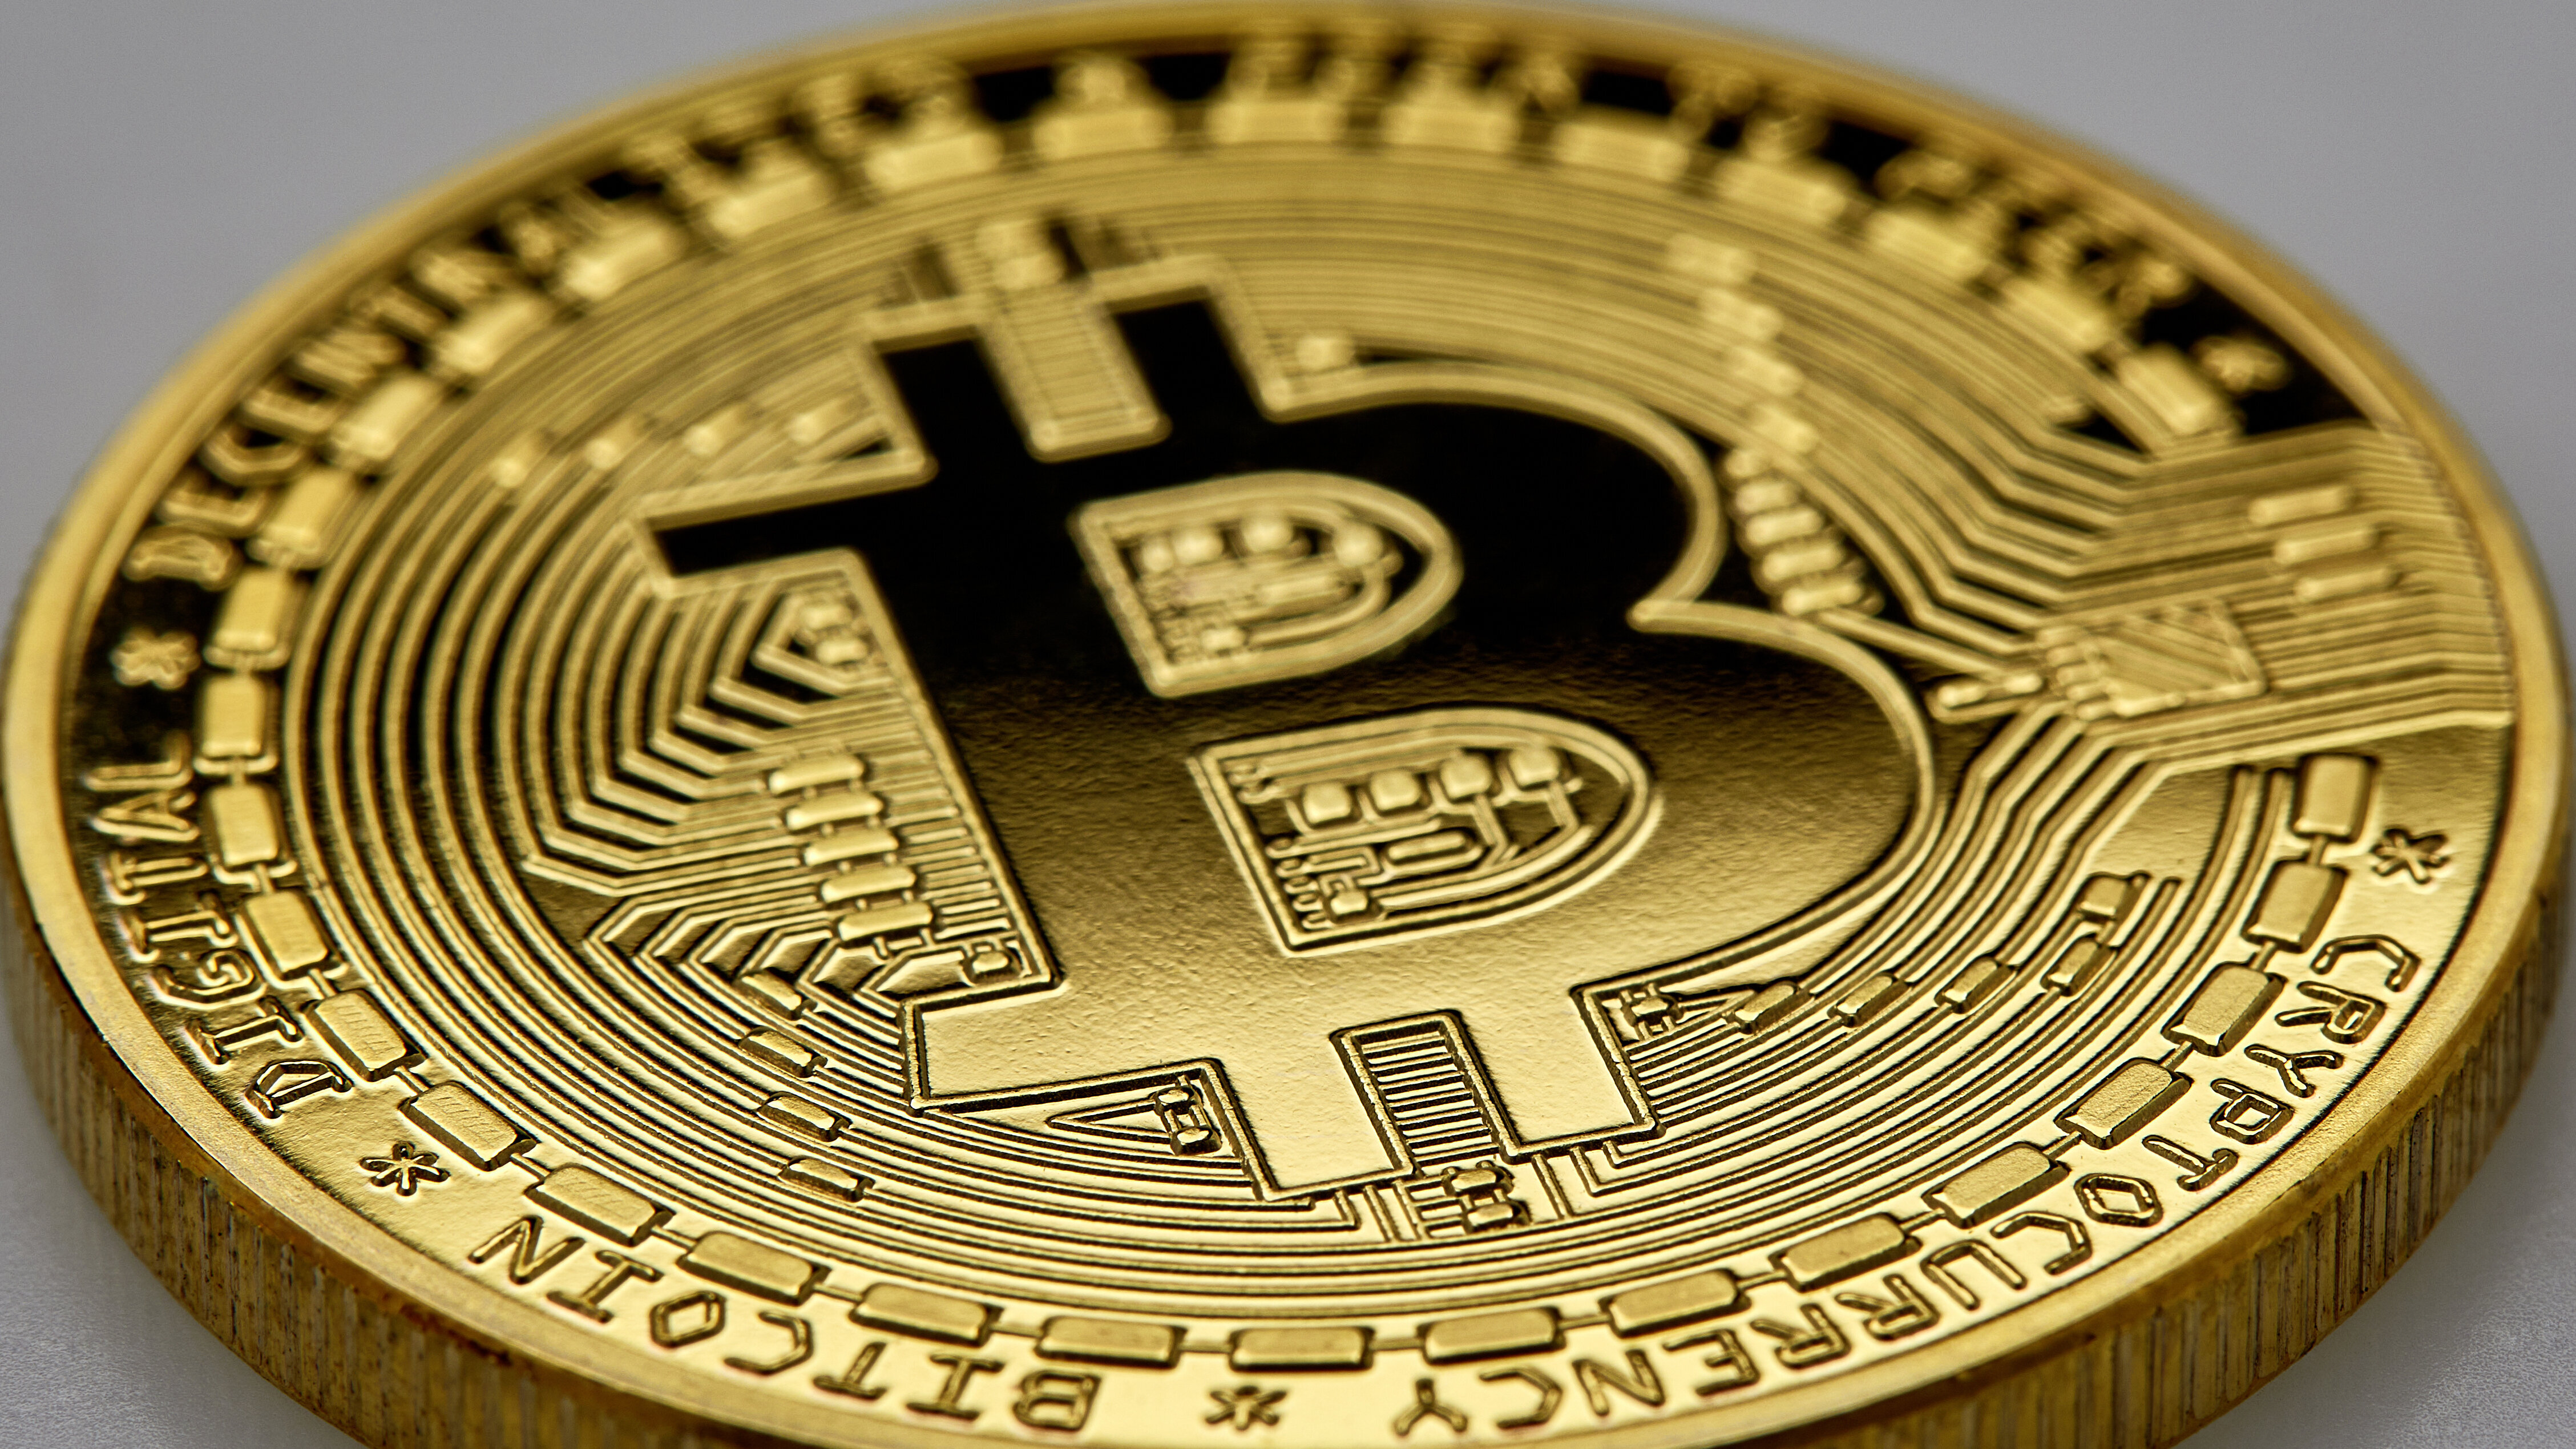 bitcoin drops below $20000 as crypto selloff quickens